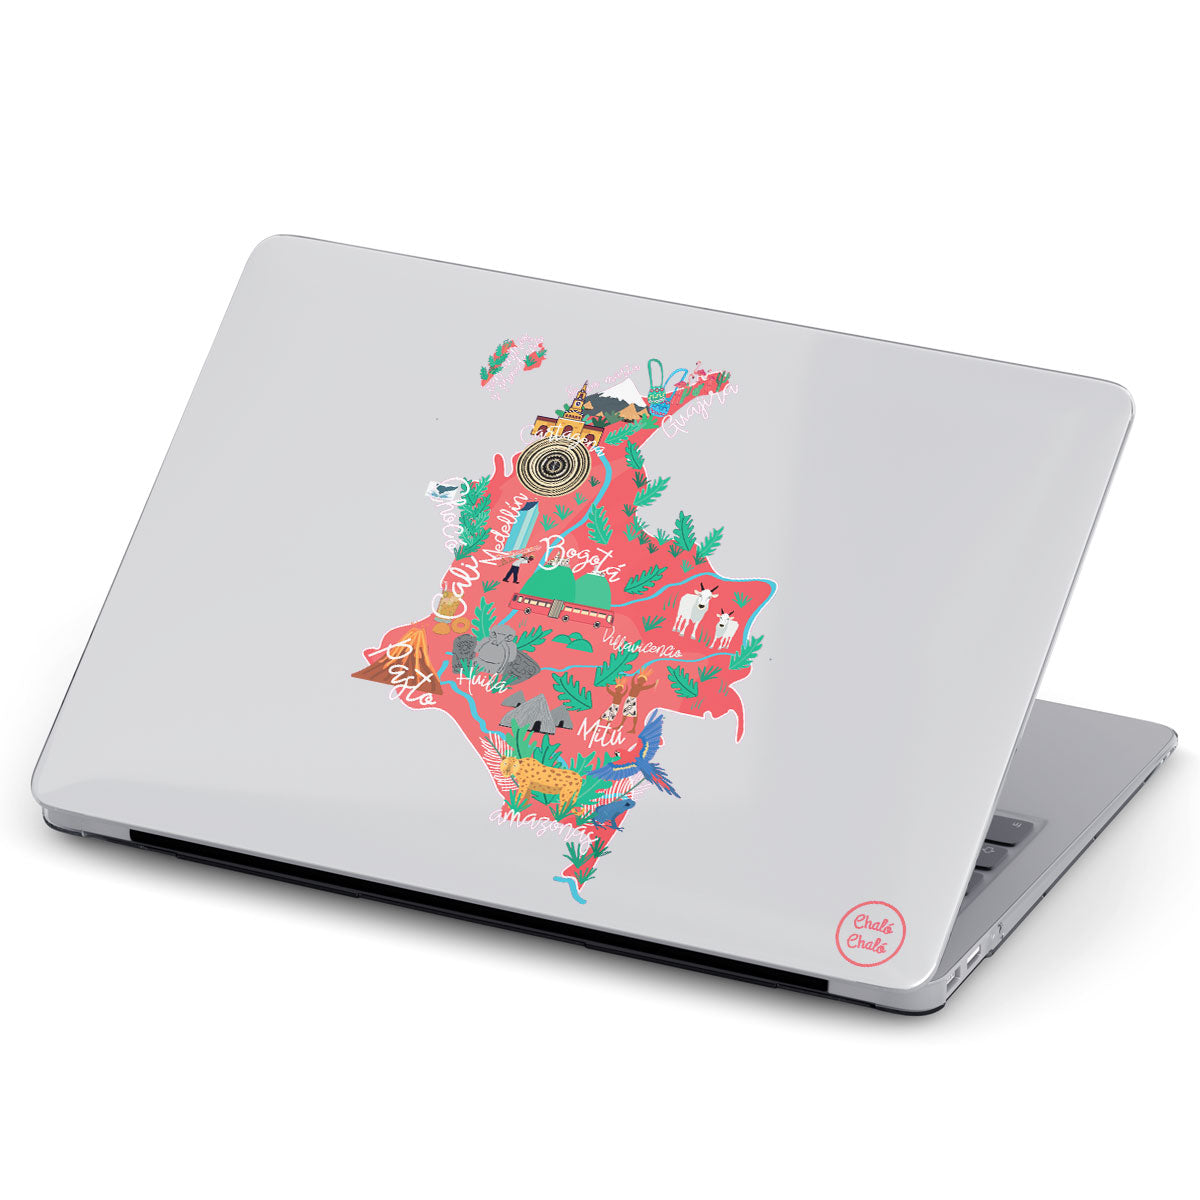 Hard Case para Macbook - Mapa de Colombia - Chaló Chaló